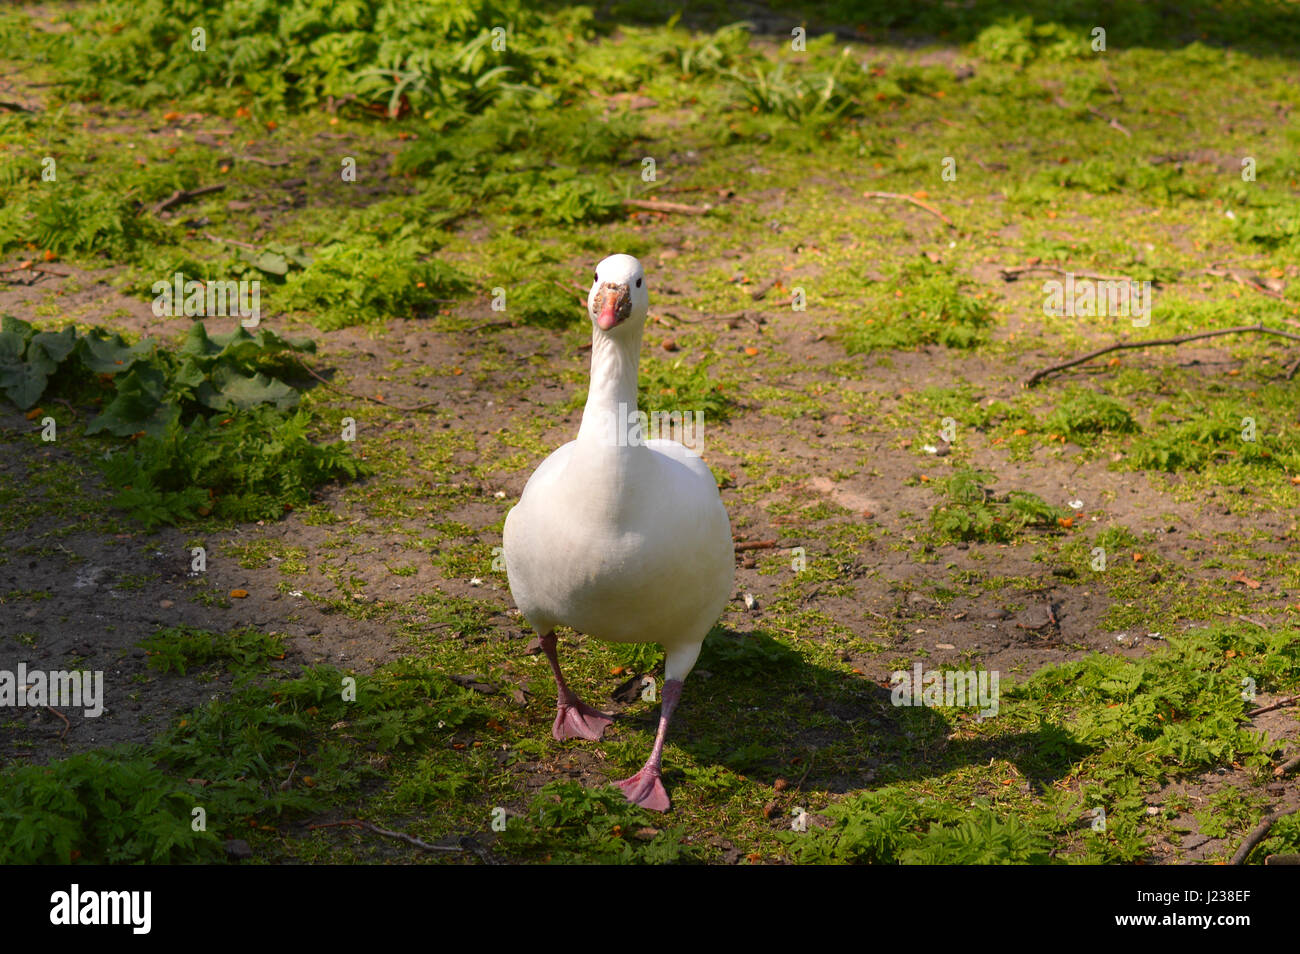 Aylesbury duck sull'erba Foto Stock